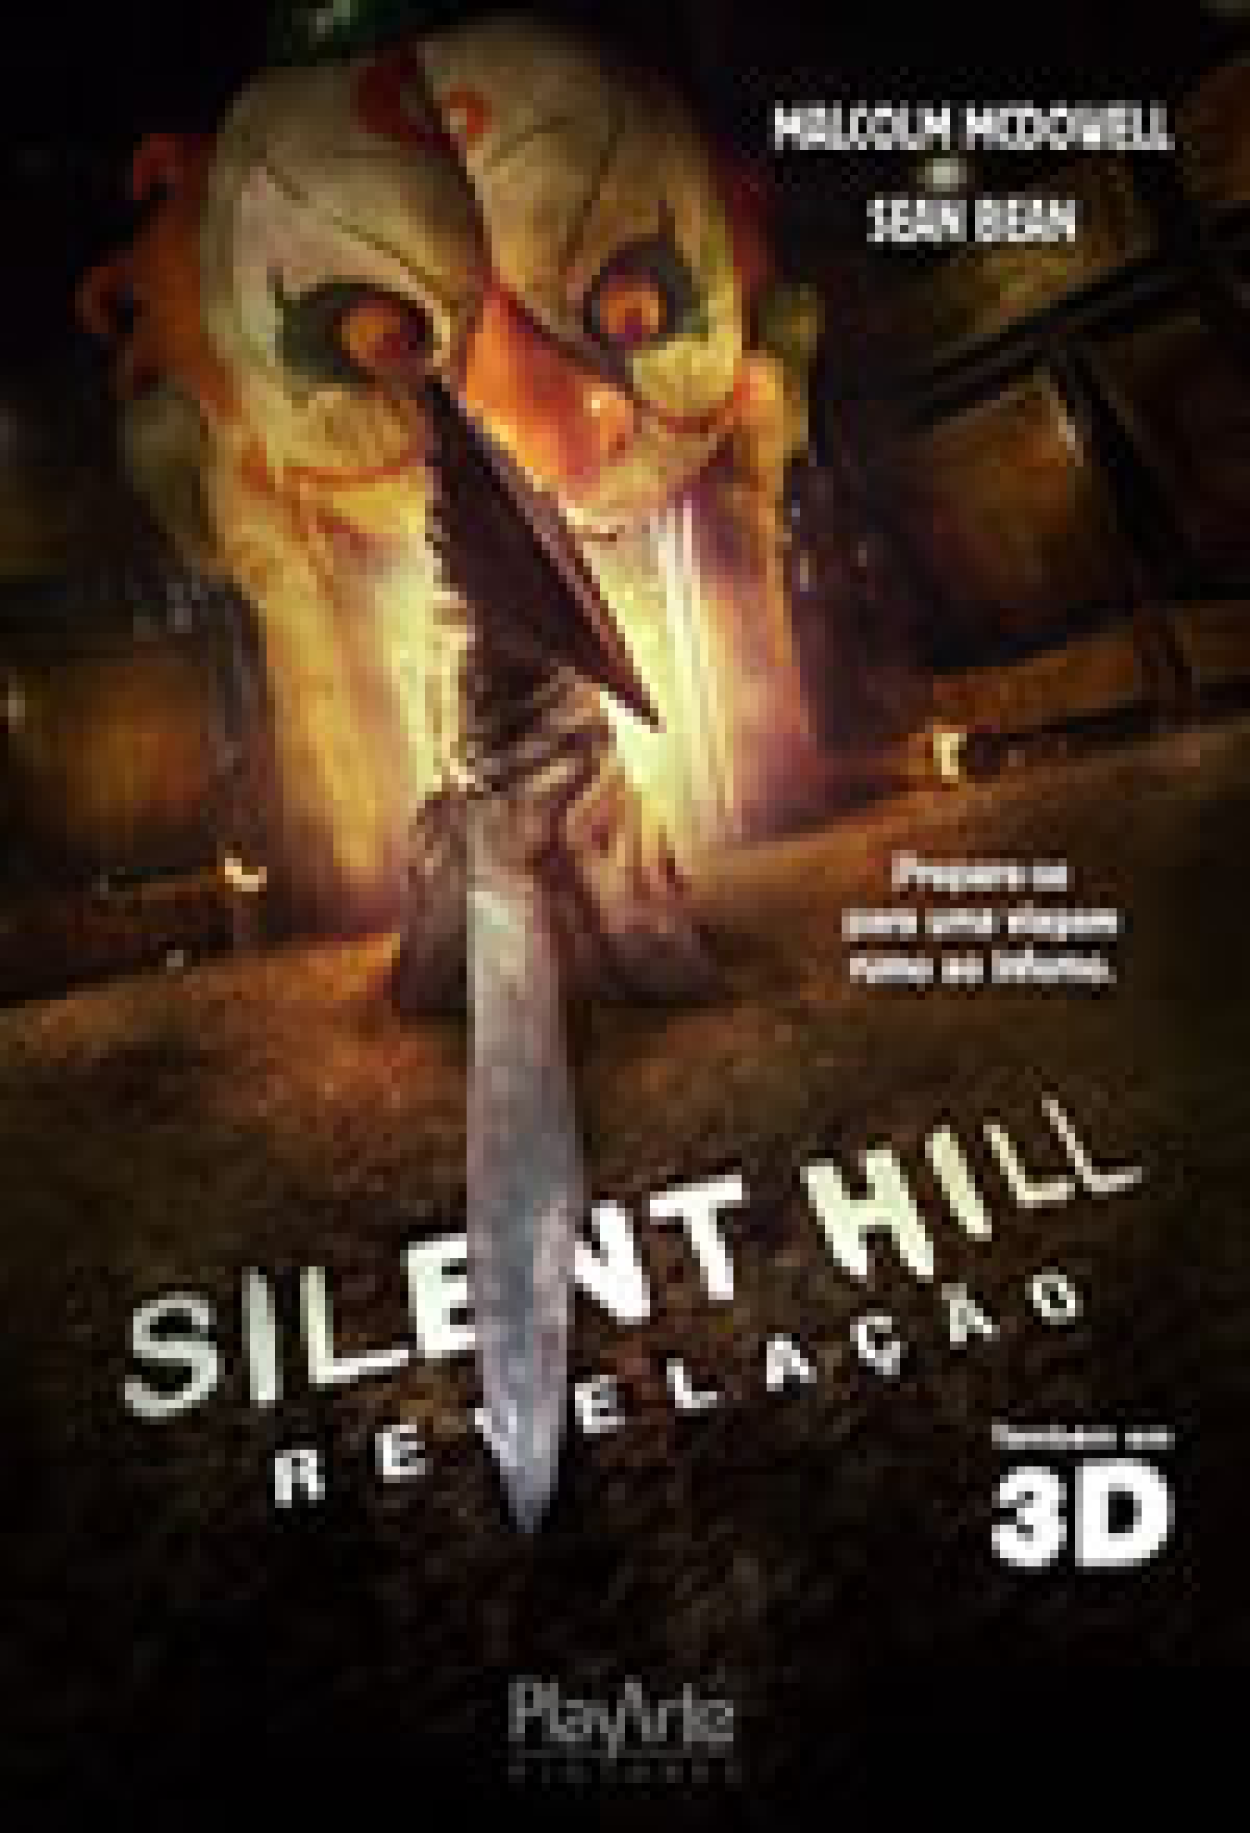 Terror em Silent Hill (Silent Hill 2006) - TRAILER LEGENDADO 